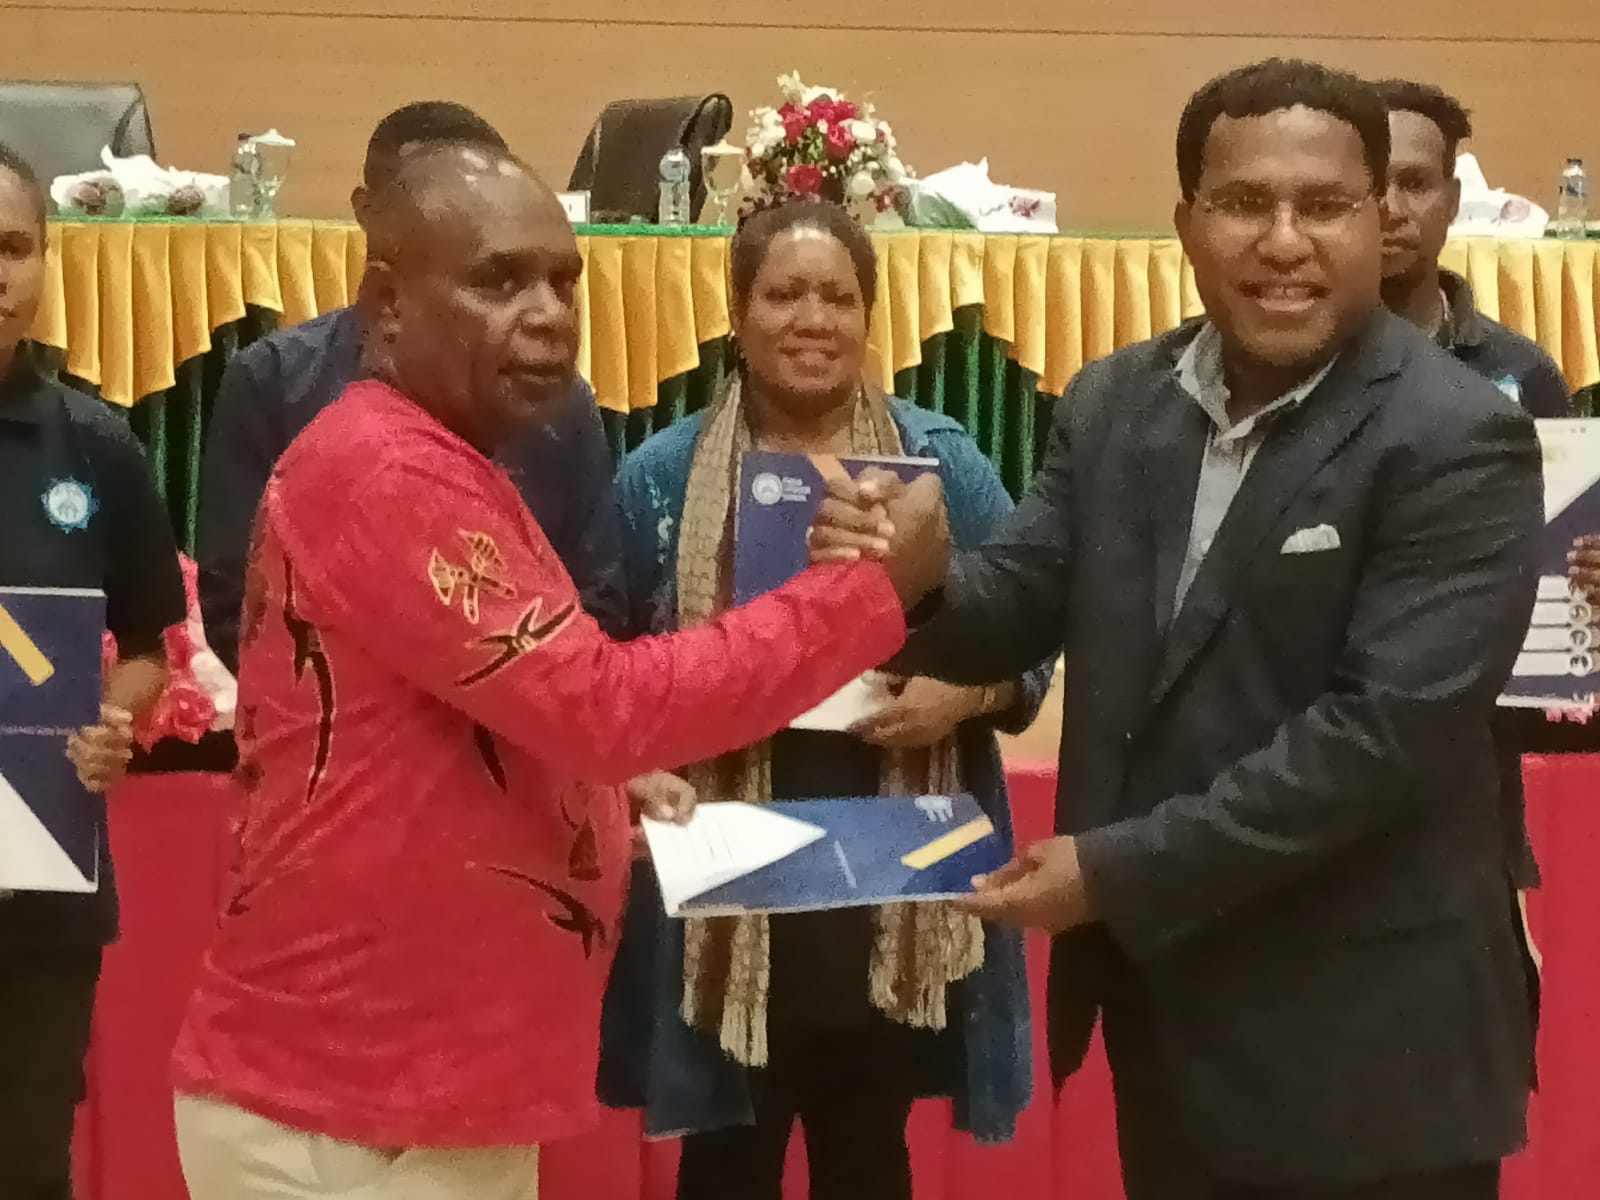 Bupati Merauke, Romanus Mbaraka sedang berpegangan tangan dengan Direktur PLI, Samuel Tabuni – Surya Papua/Frans Kobun